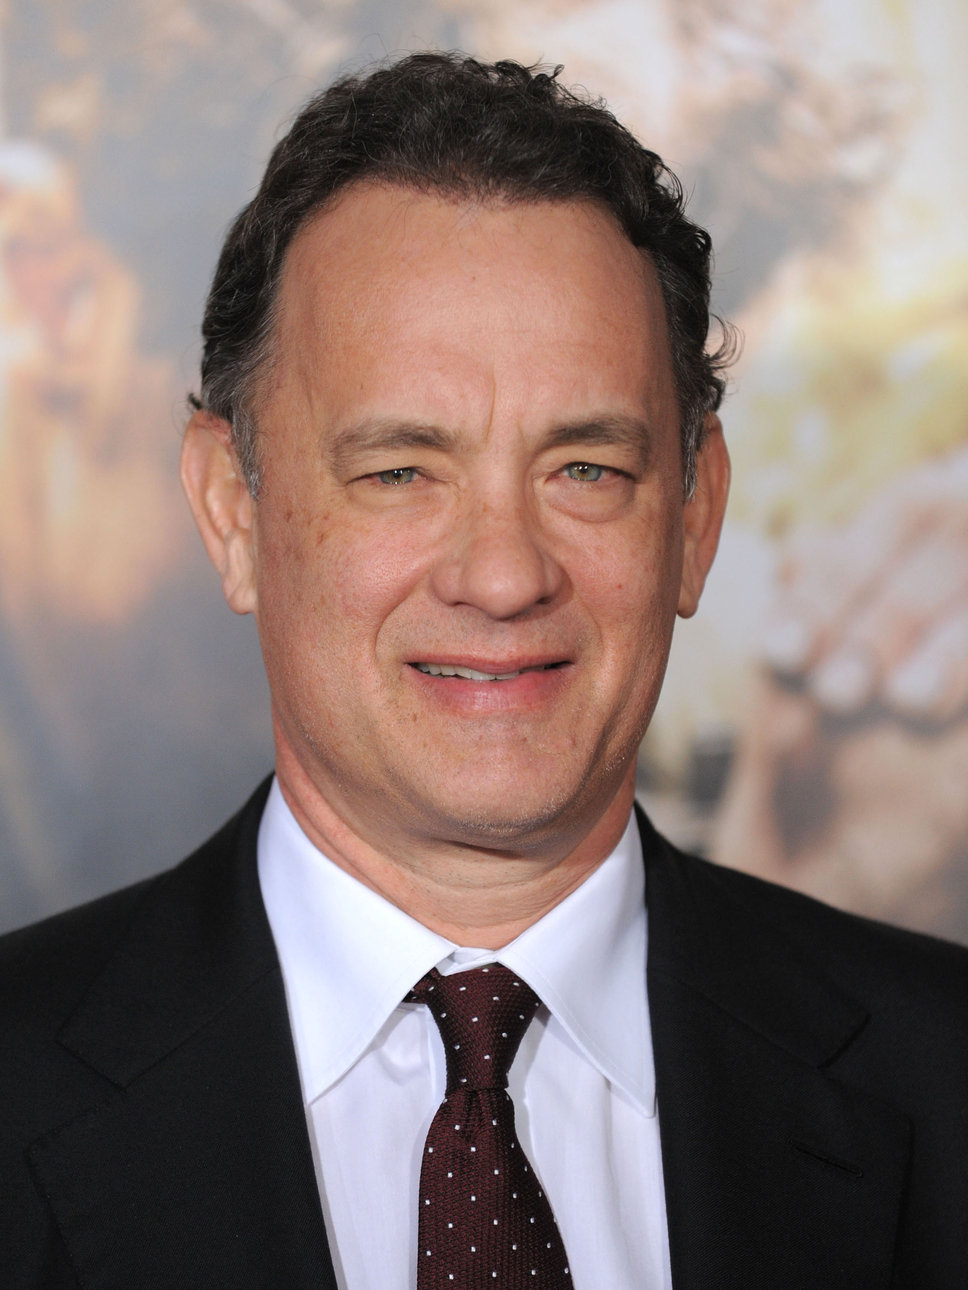 Anulan juicio en EEUU porque abogada buscó conversación a ¡Tom Hanks!